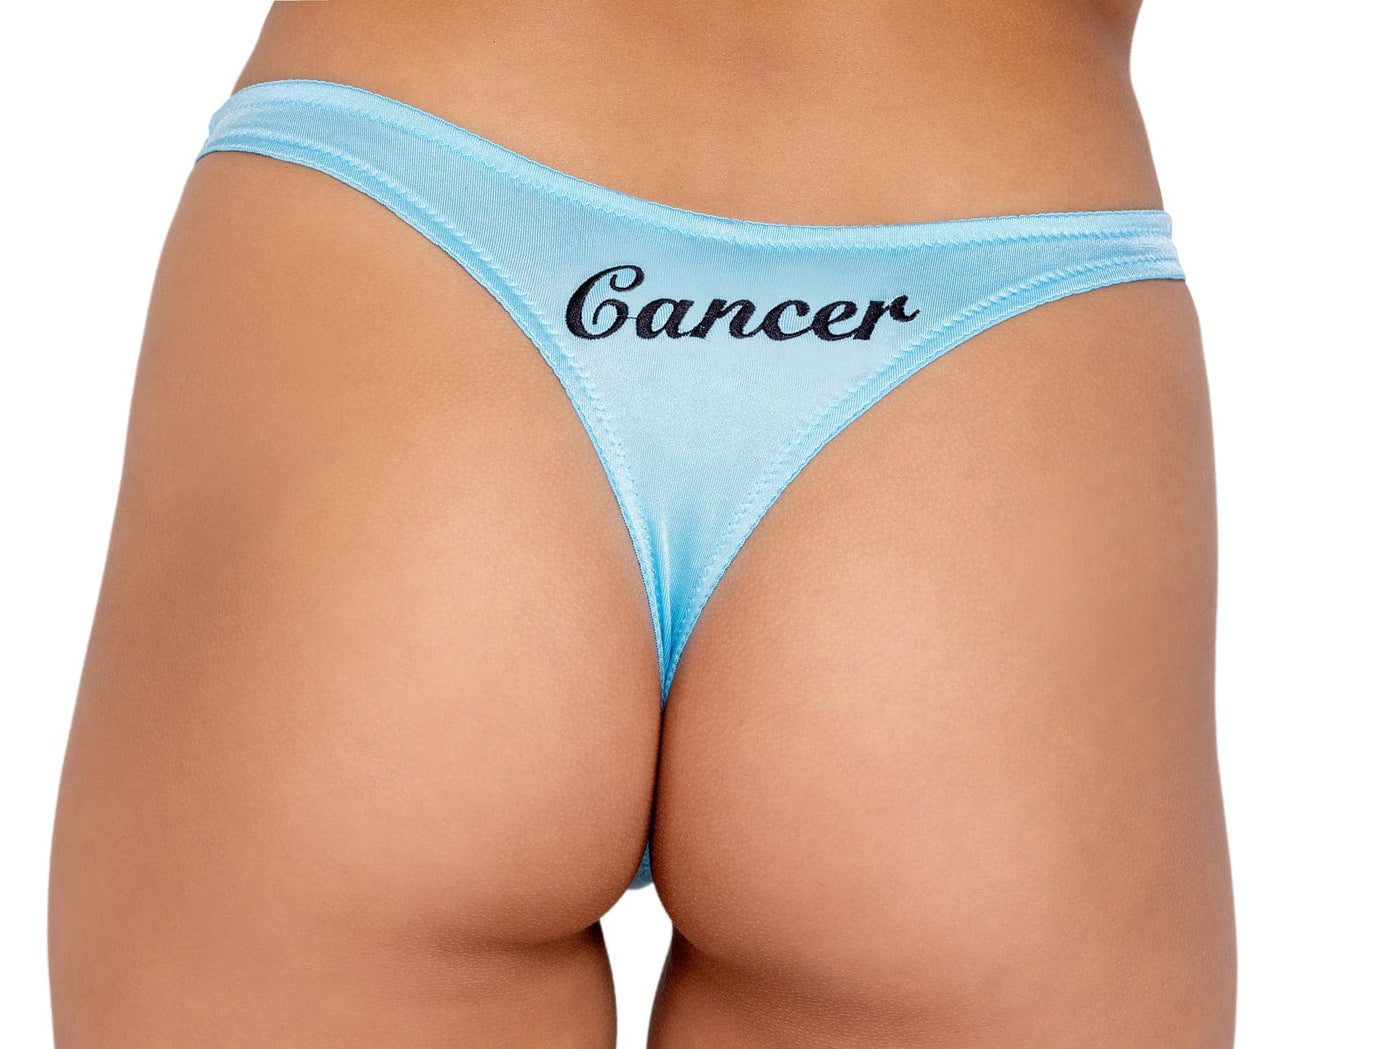 Zodiac Cancer Panty - For Love of Lingerie